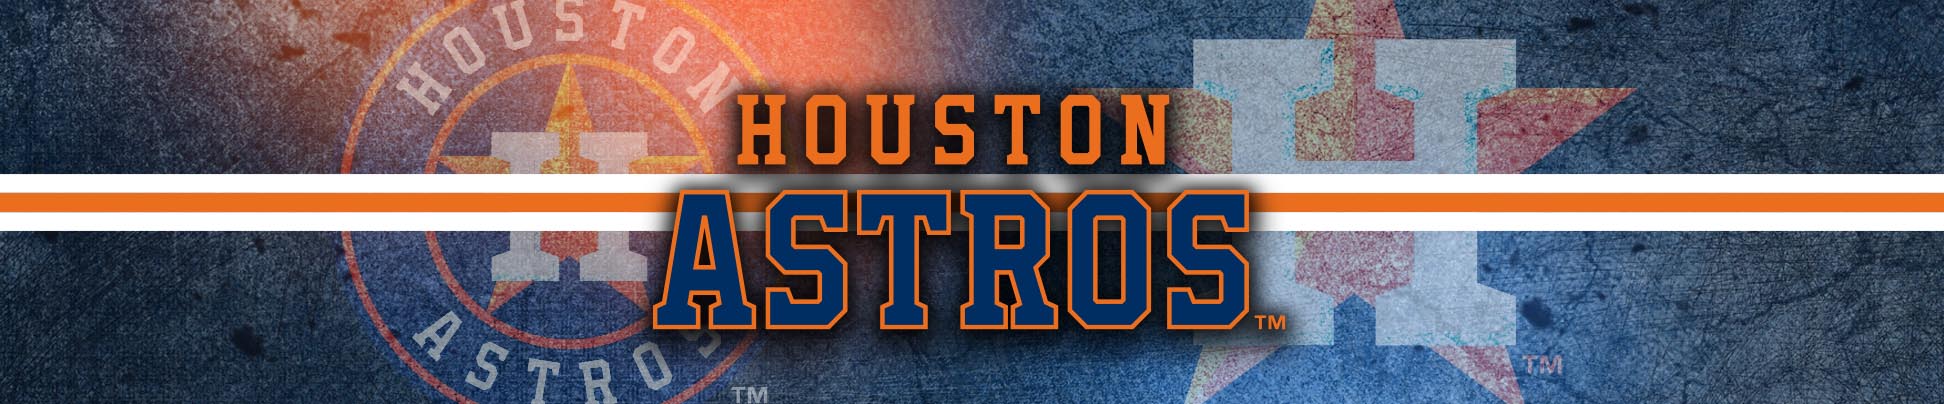 Houston Astros Memorabilia & Collectibles